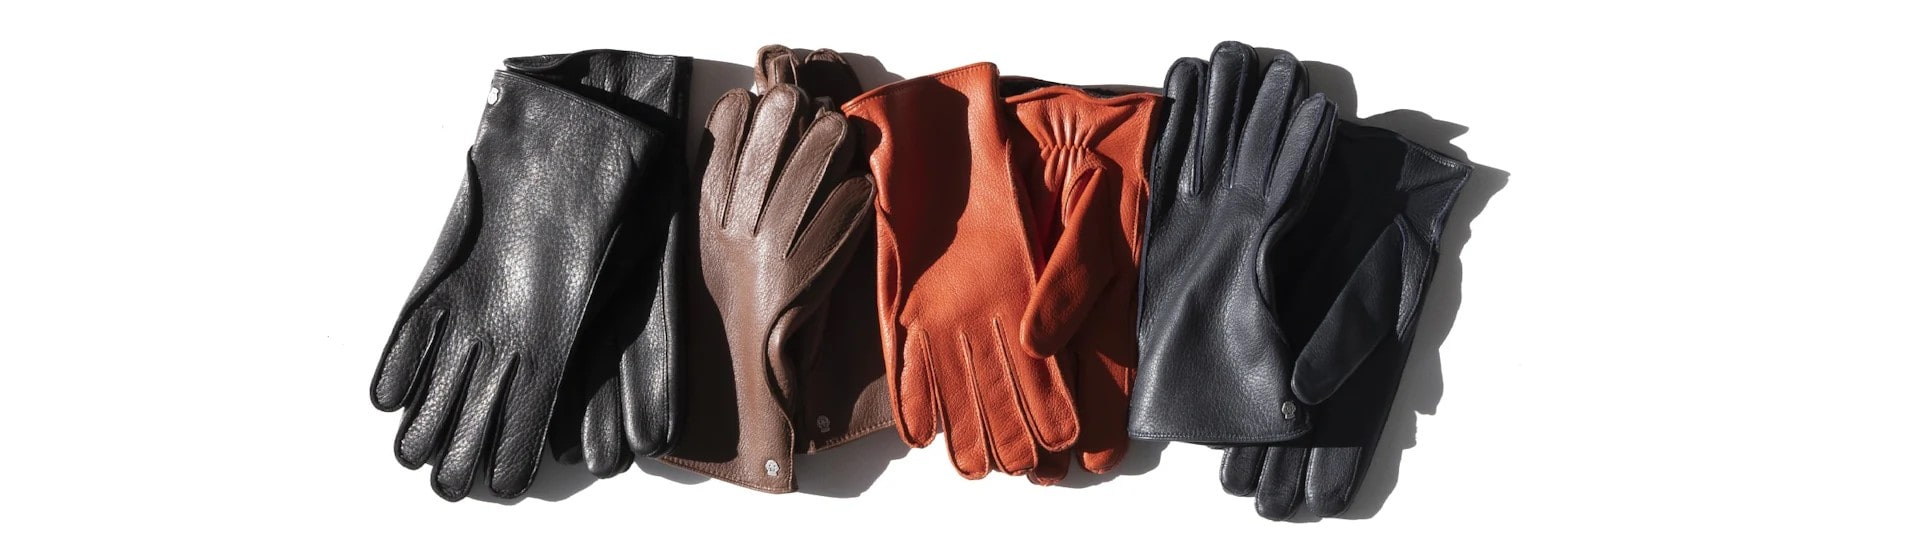 The leather glove Hanko in brown made of deerskin.